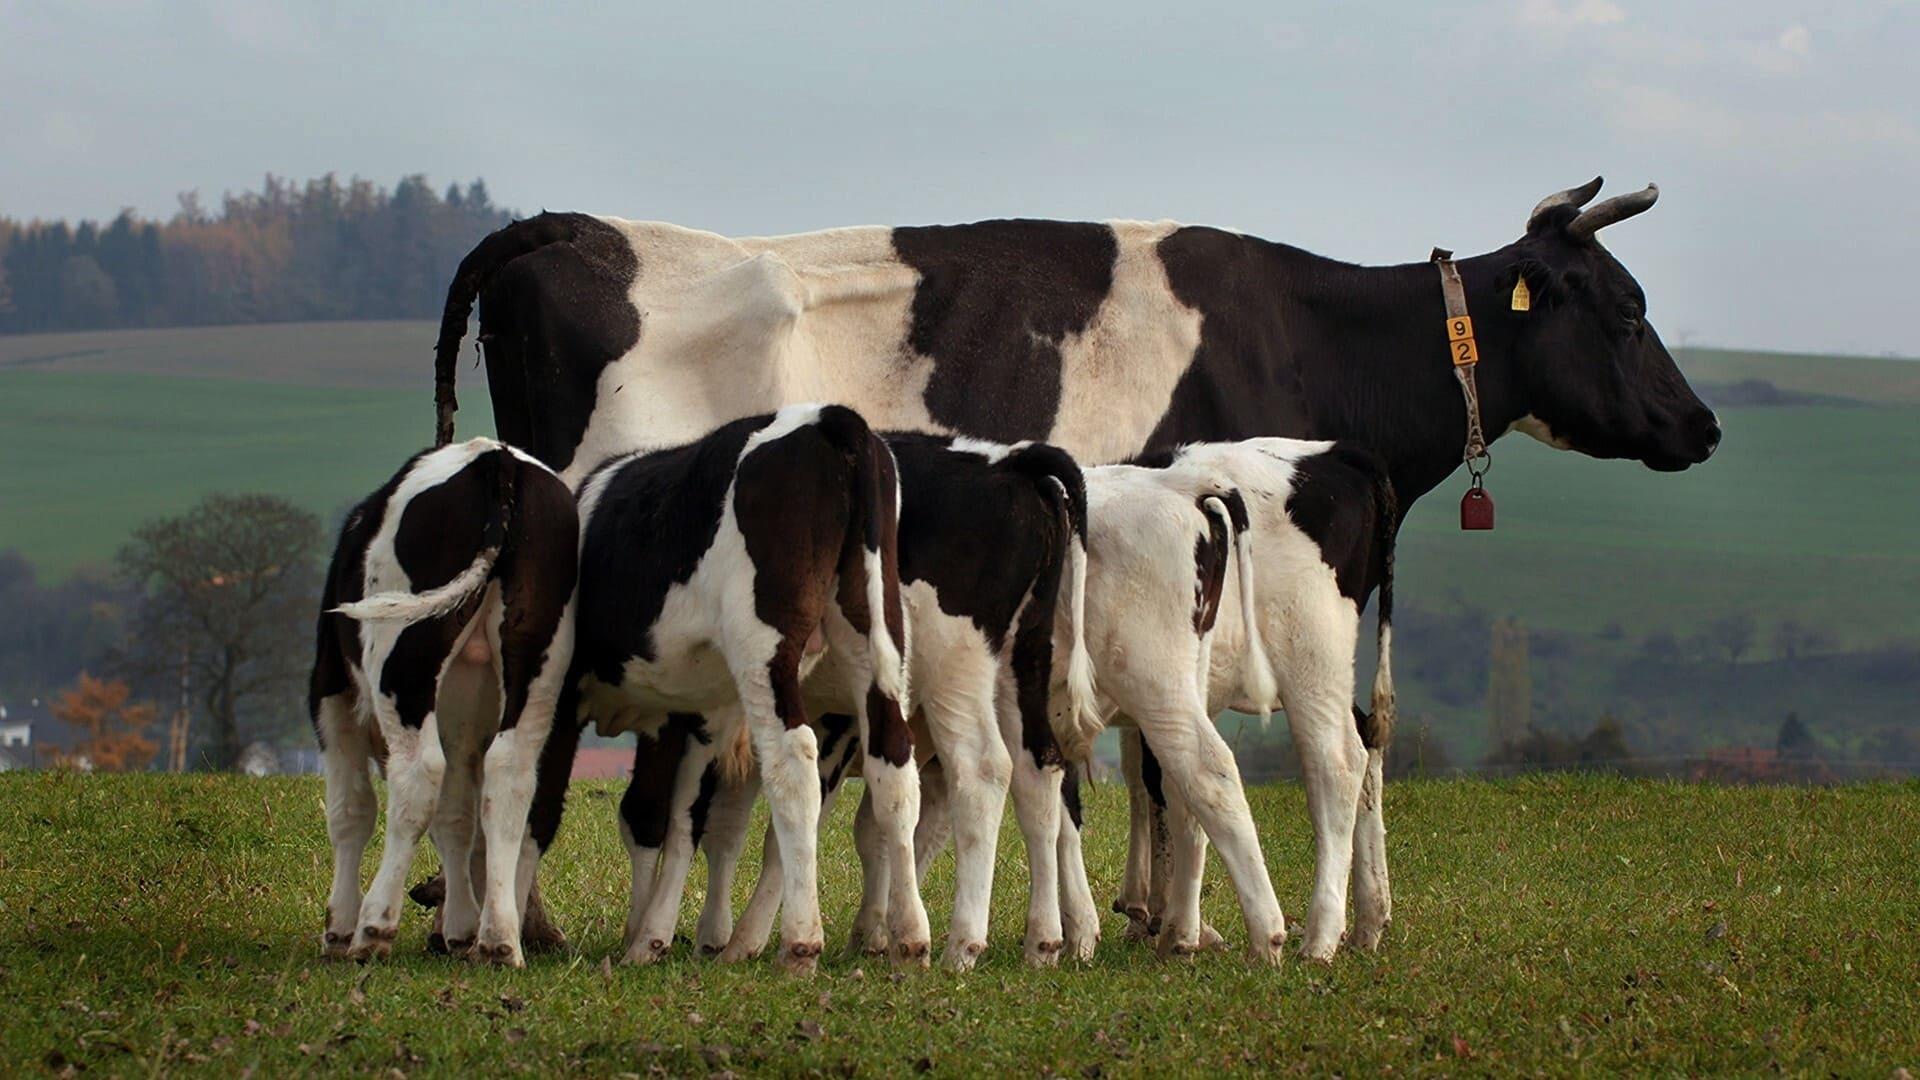 The Secret Life of Cows backdrop